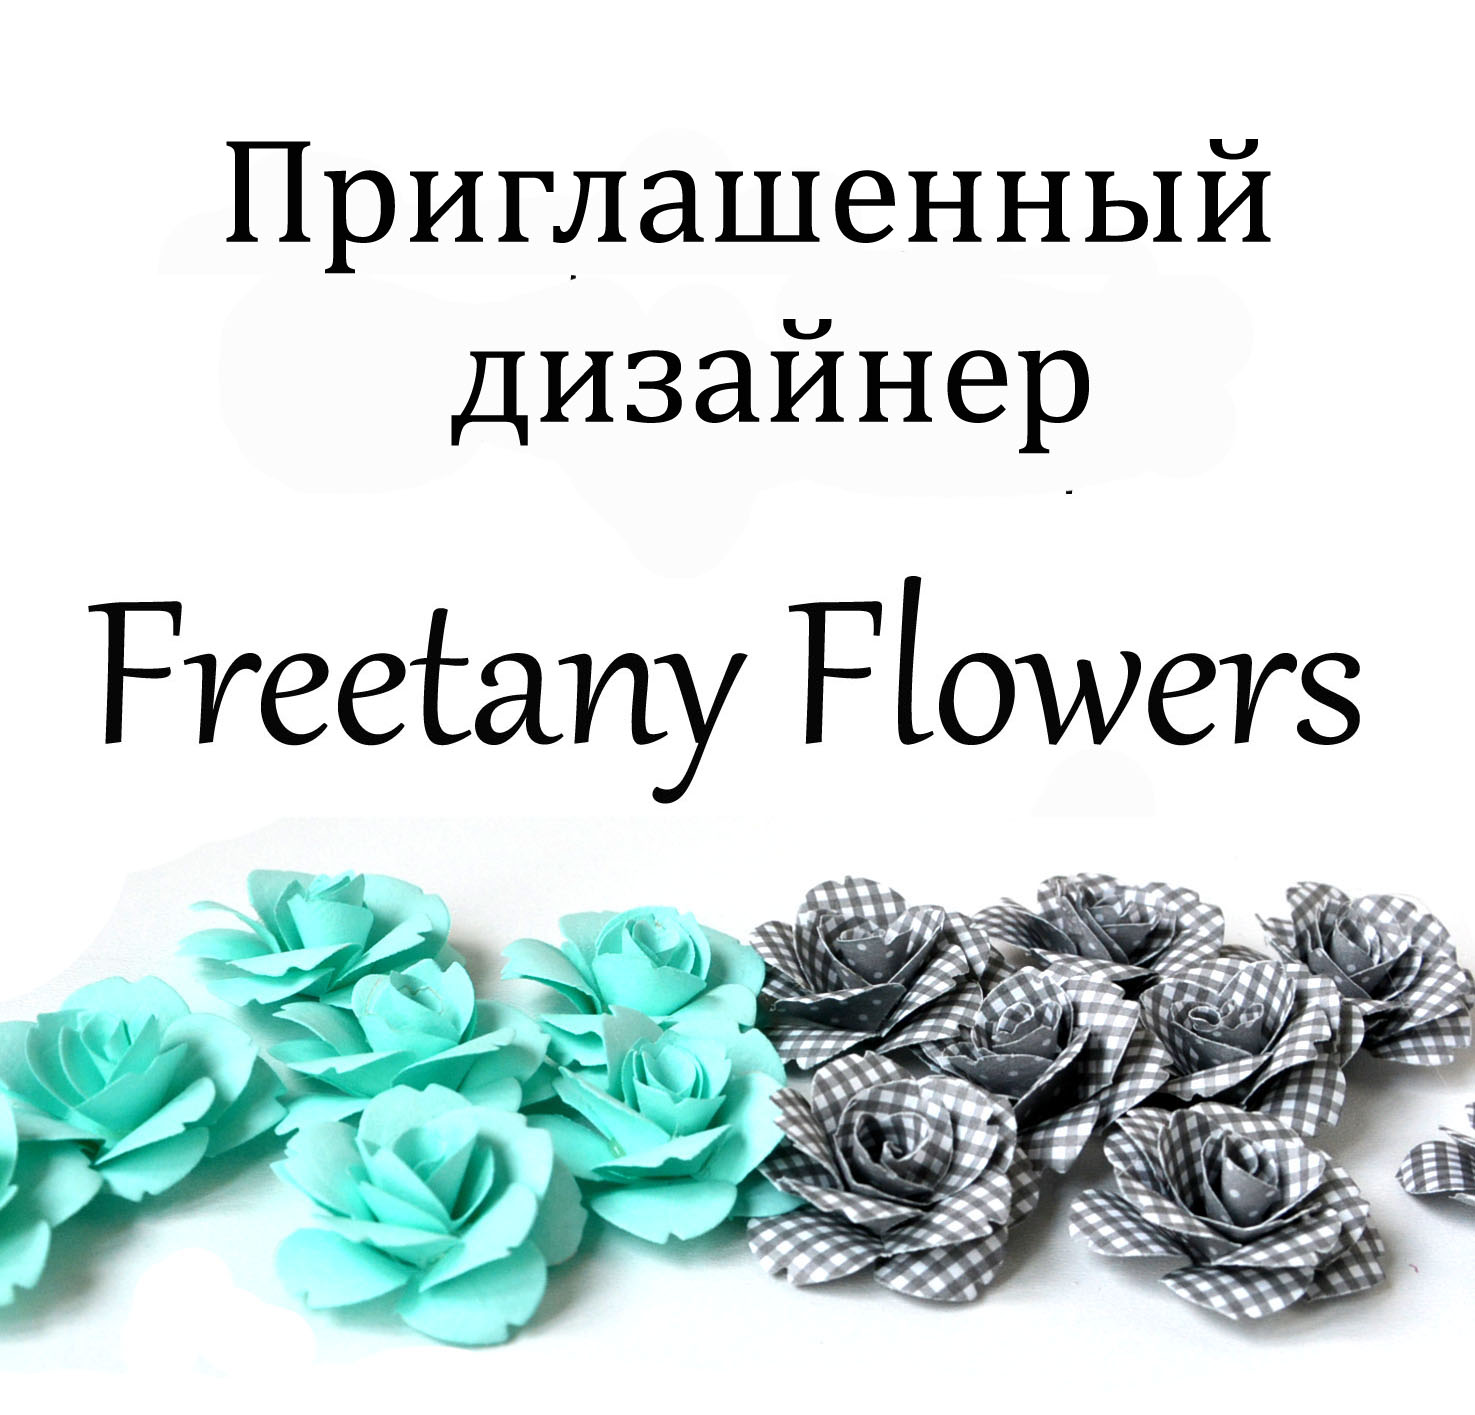 Freetany Flowers